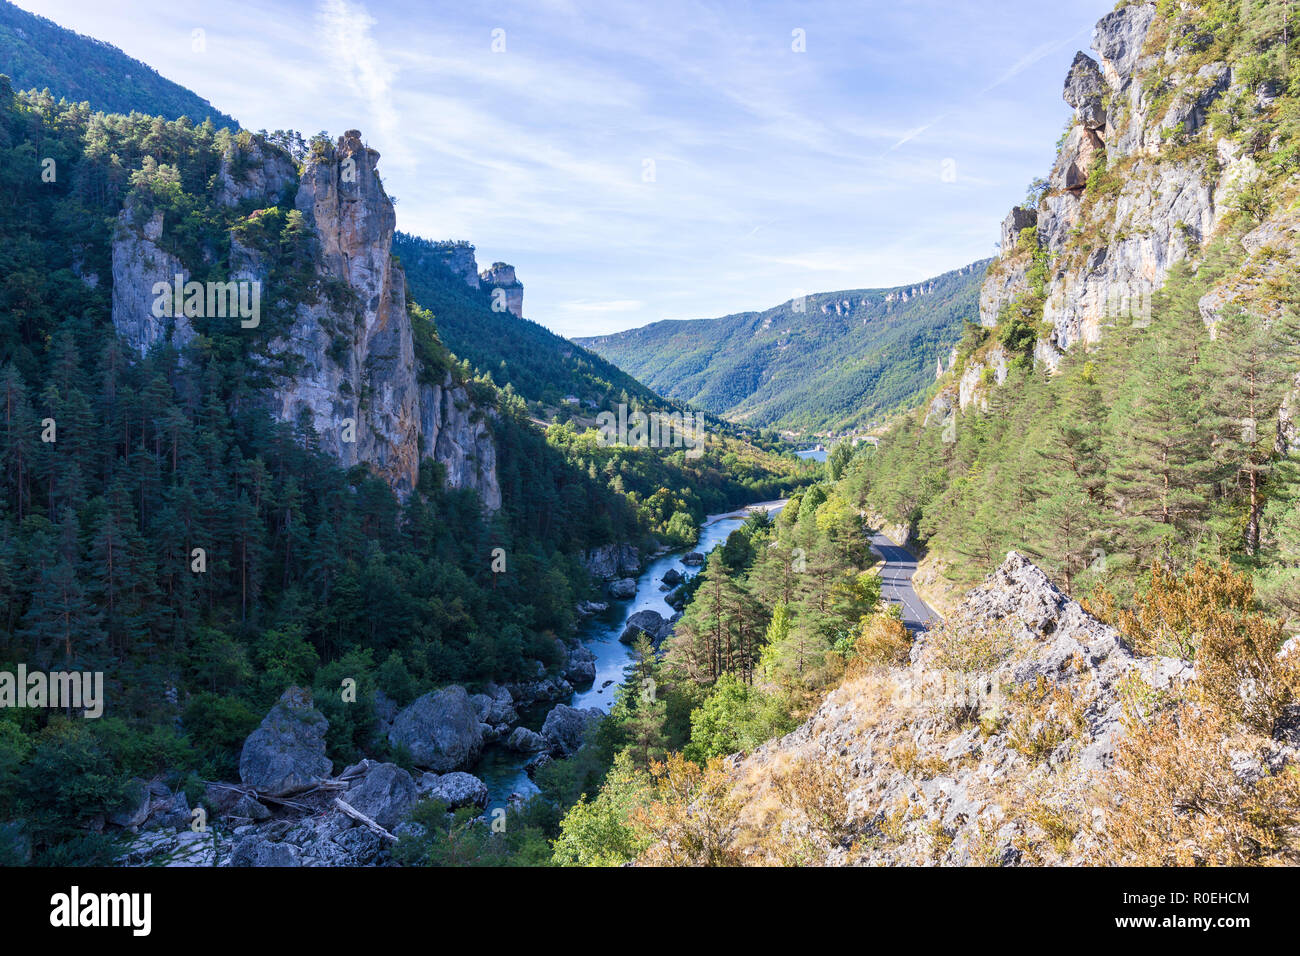 Tarn River, Gorge du Tarn, France Stock Photo